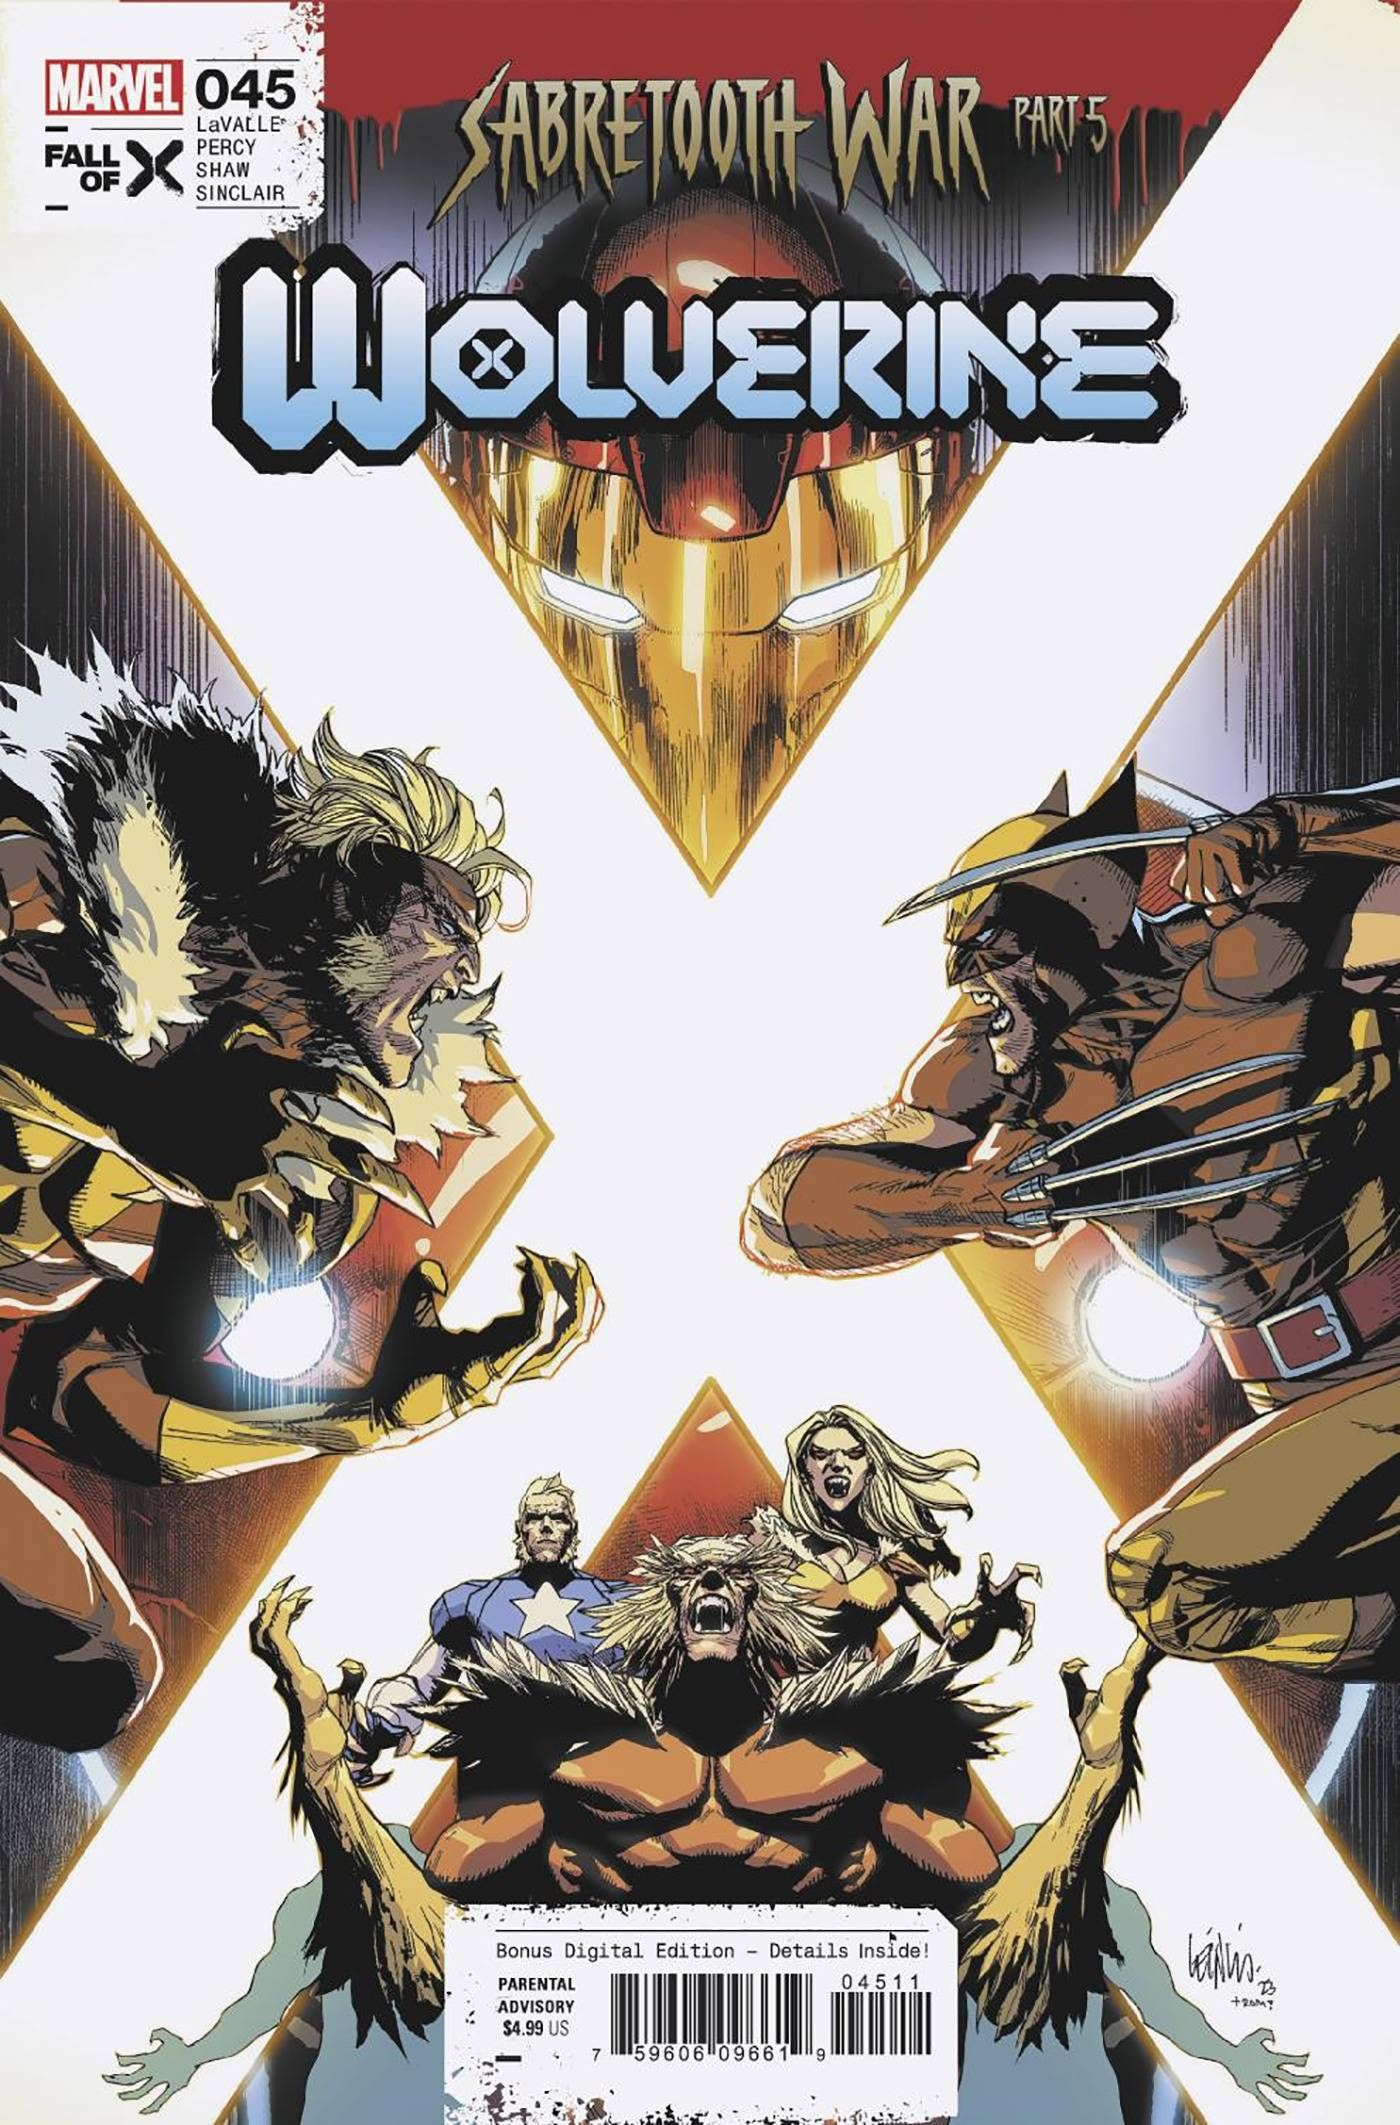 Wolverine #45 Comic